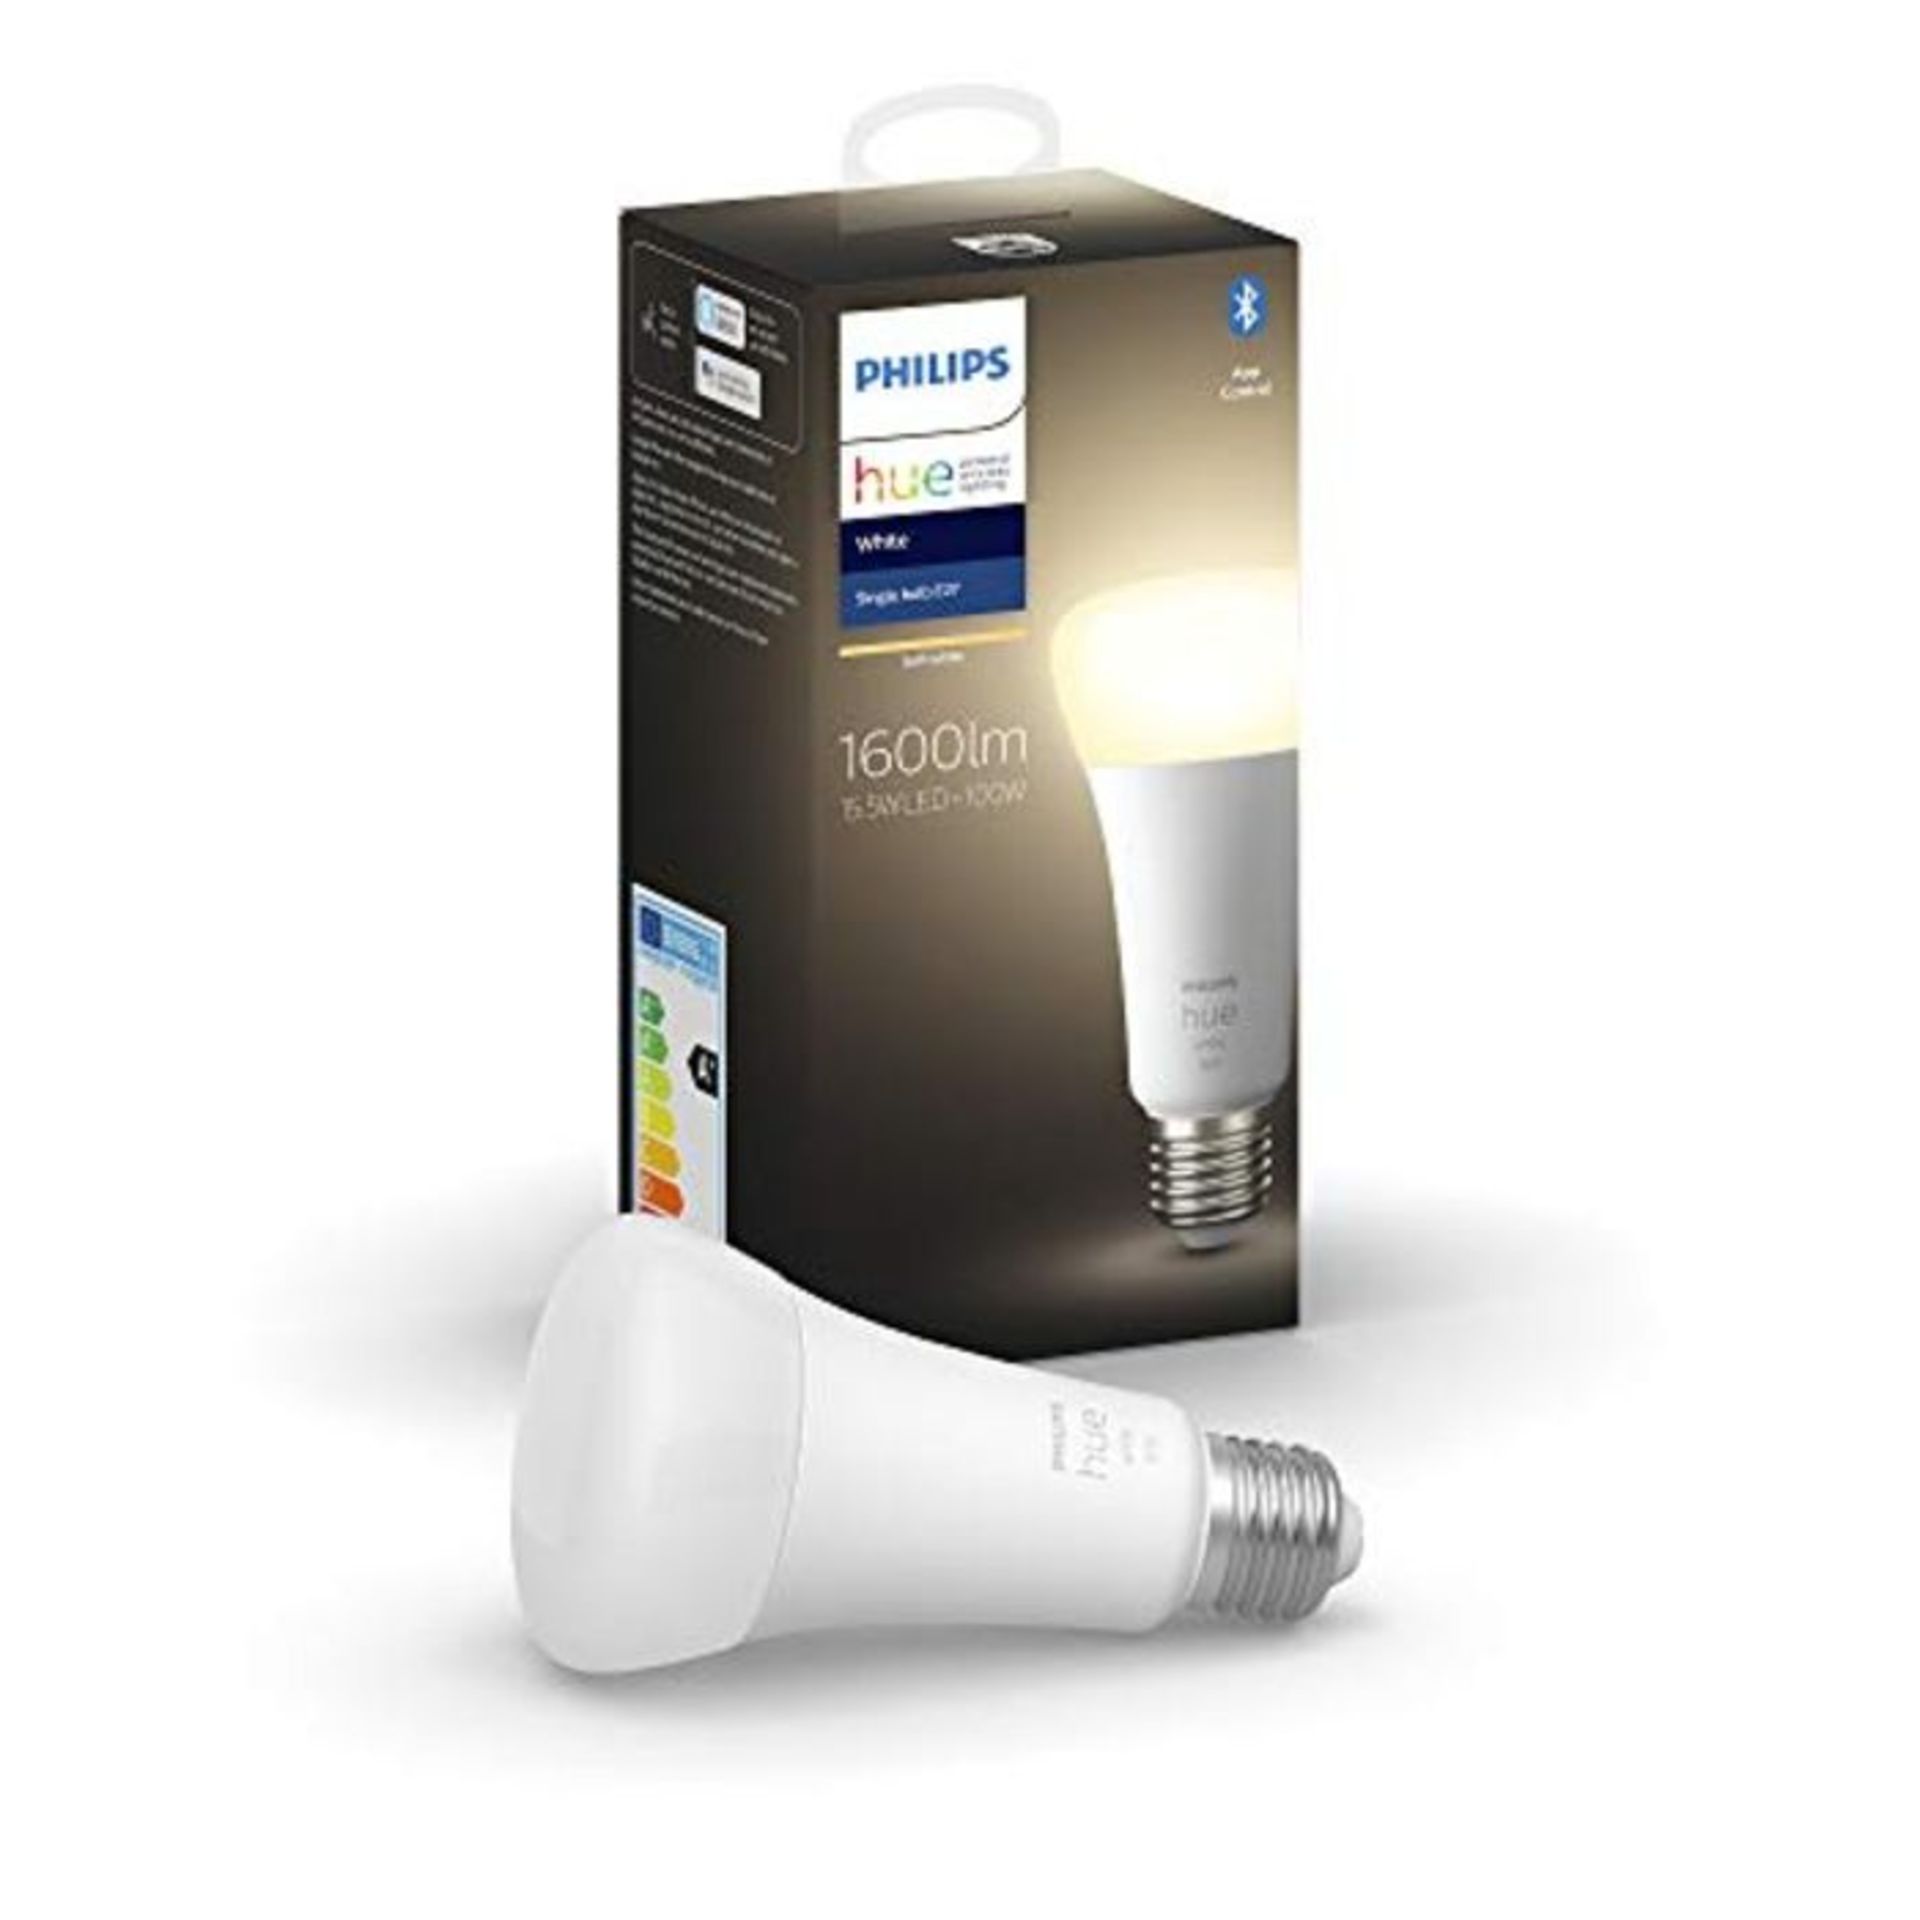 Philips Hue White E27 LED Einzelpack, hoher Lichtouput (1600lm), warmweiÃxes Licht,